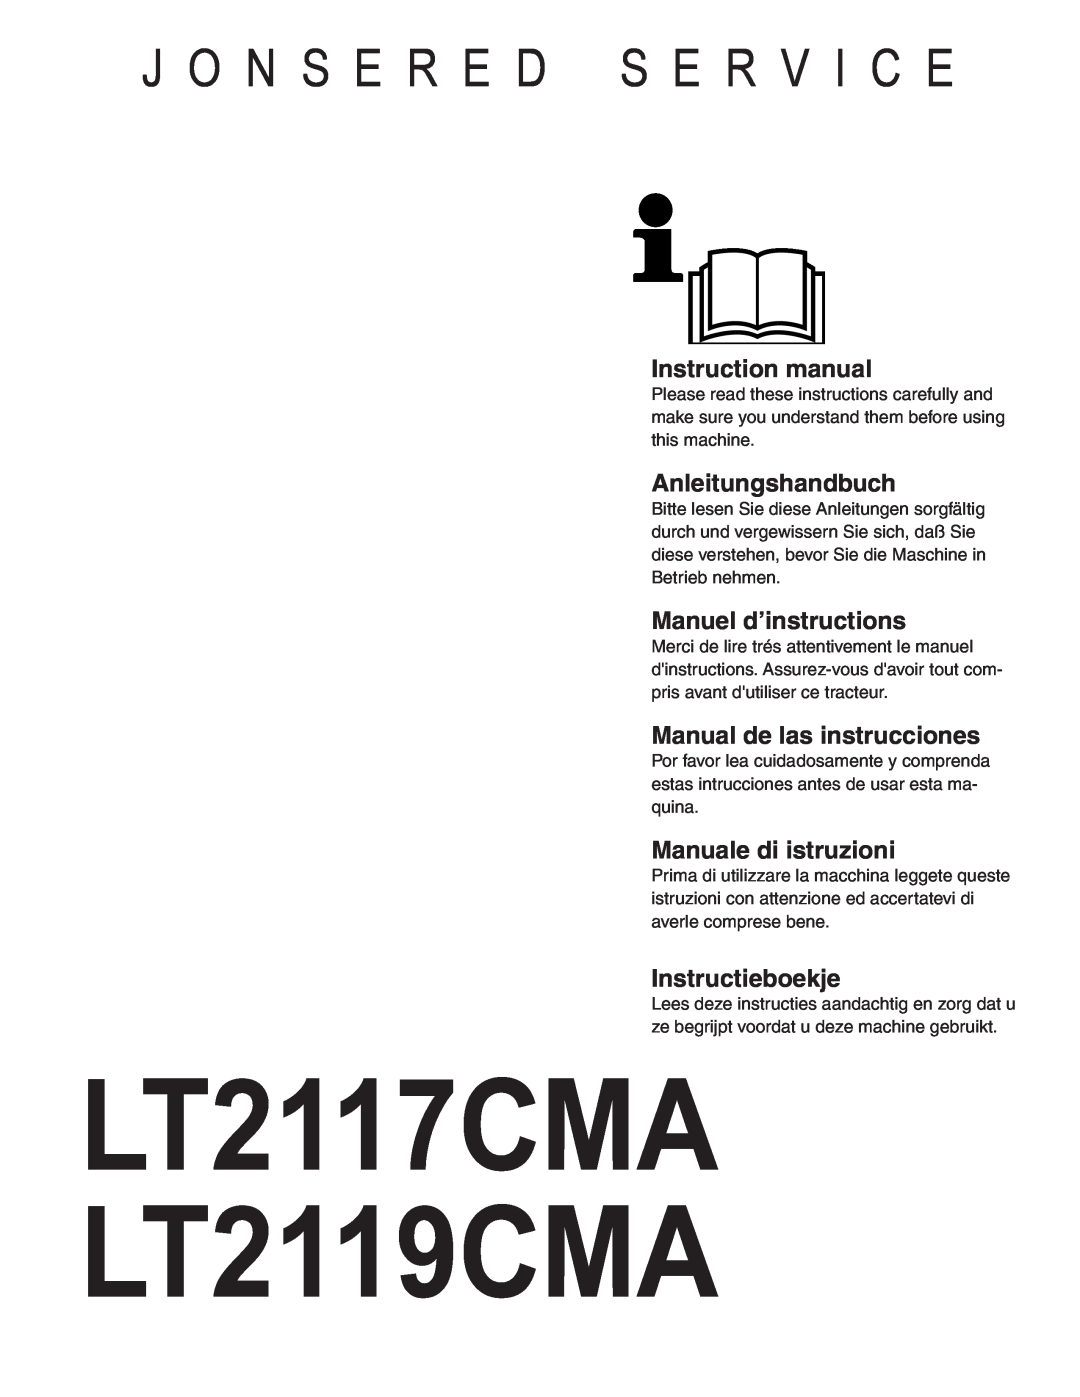 Jonsered LT2117CMA instruction manual Instruction manual, Anleitungshandbuch, Manuel d’instructions, Manuale di istruzioni 